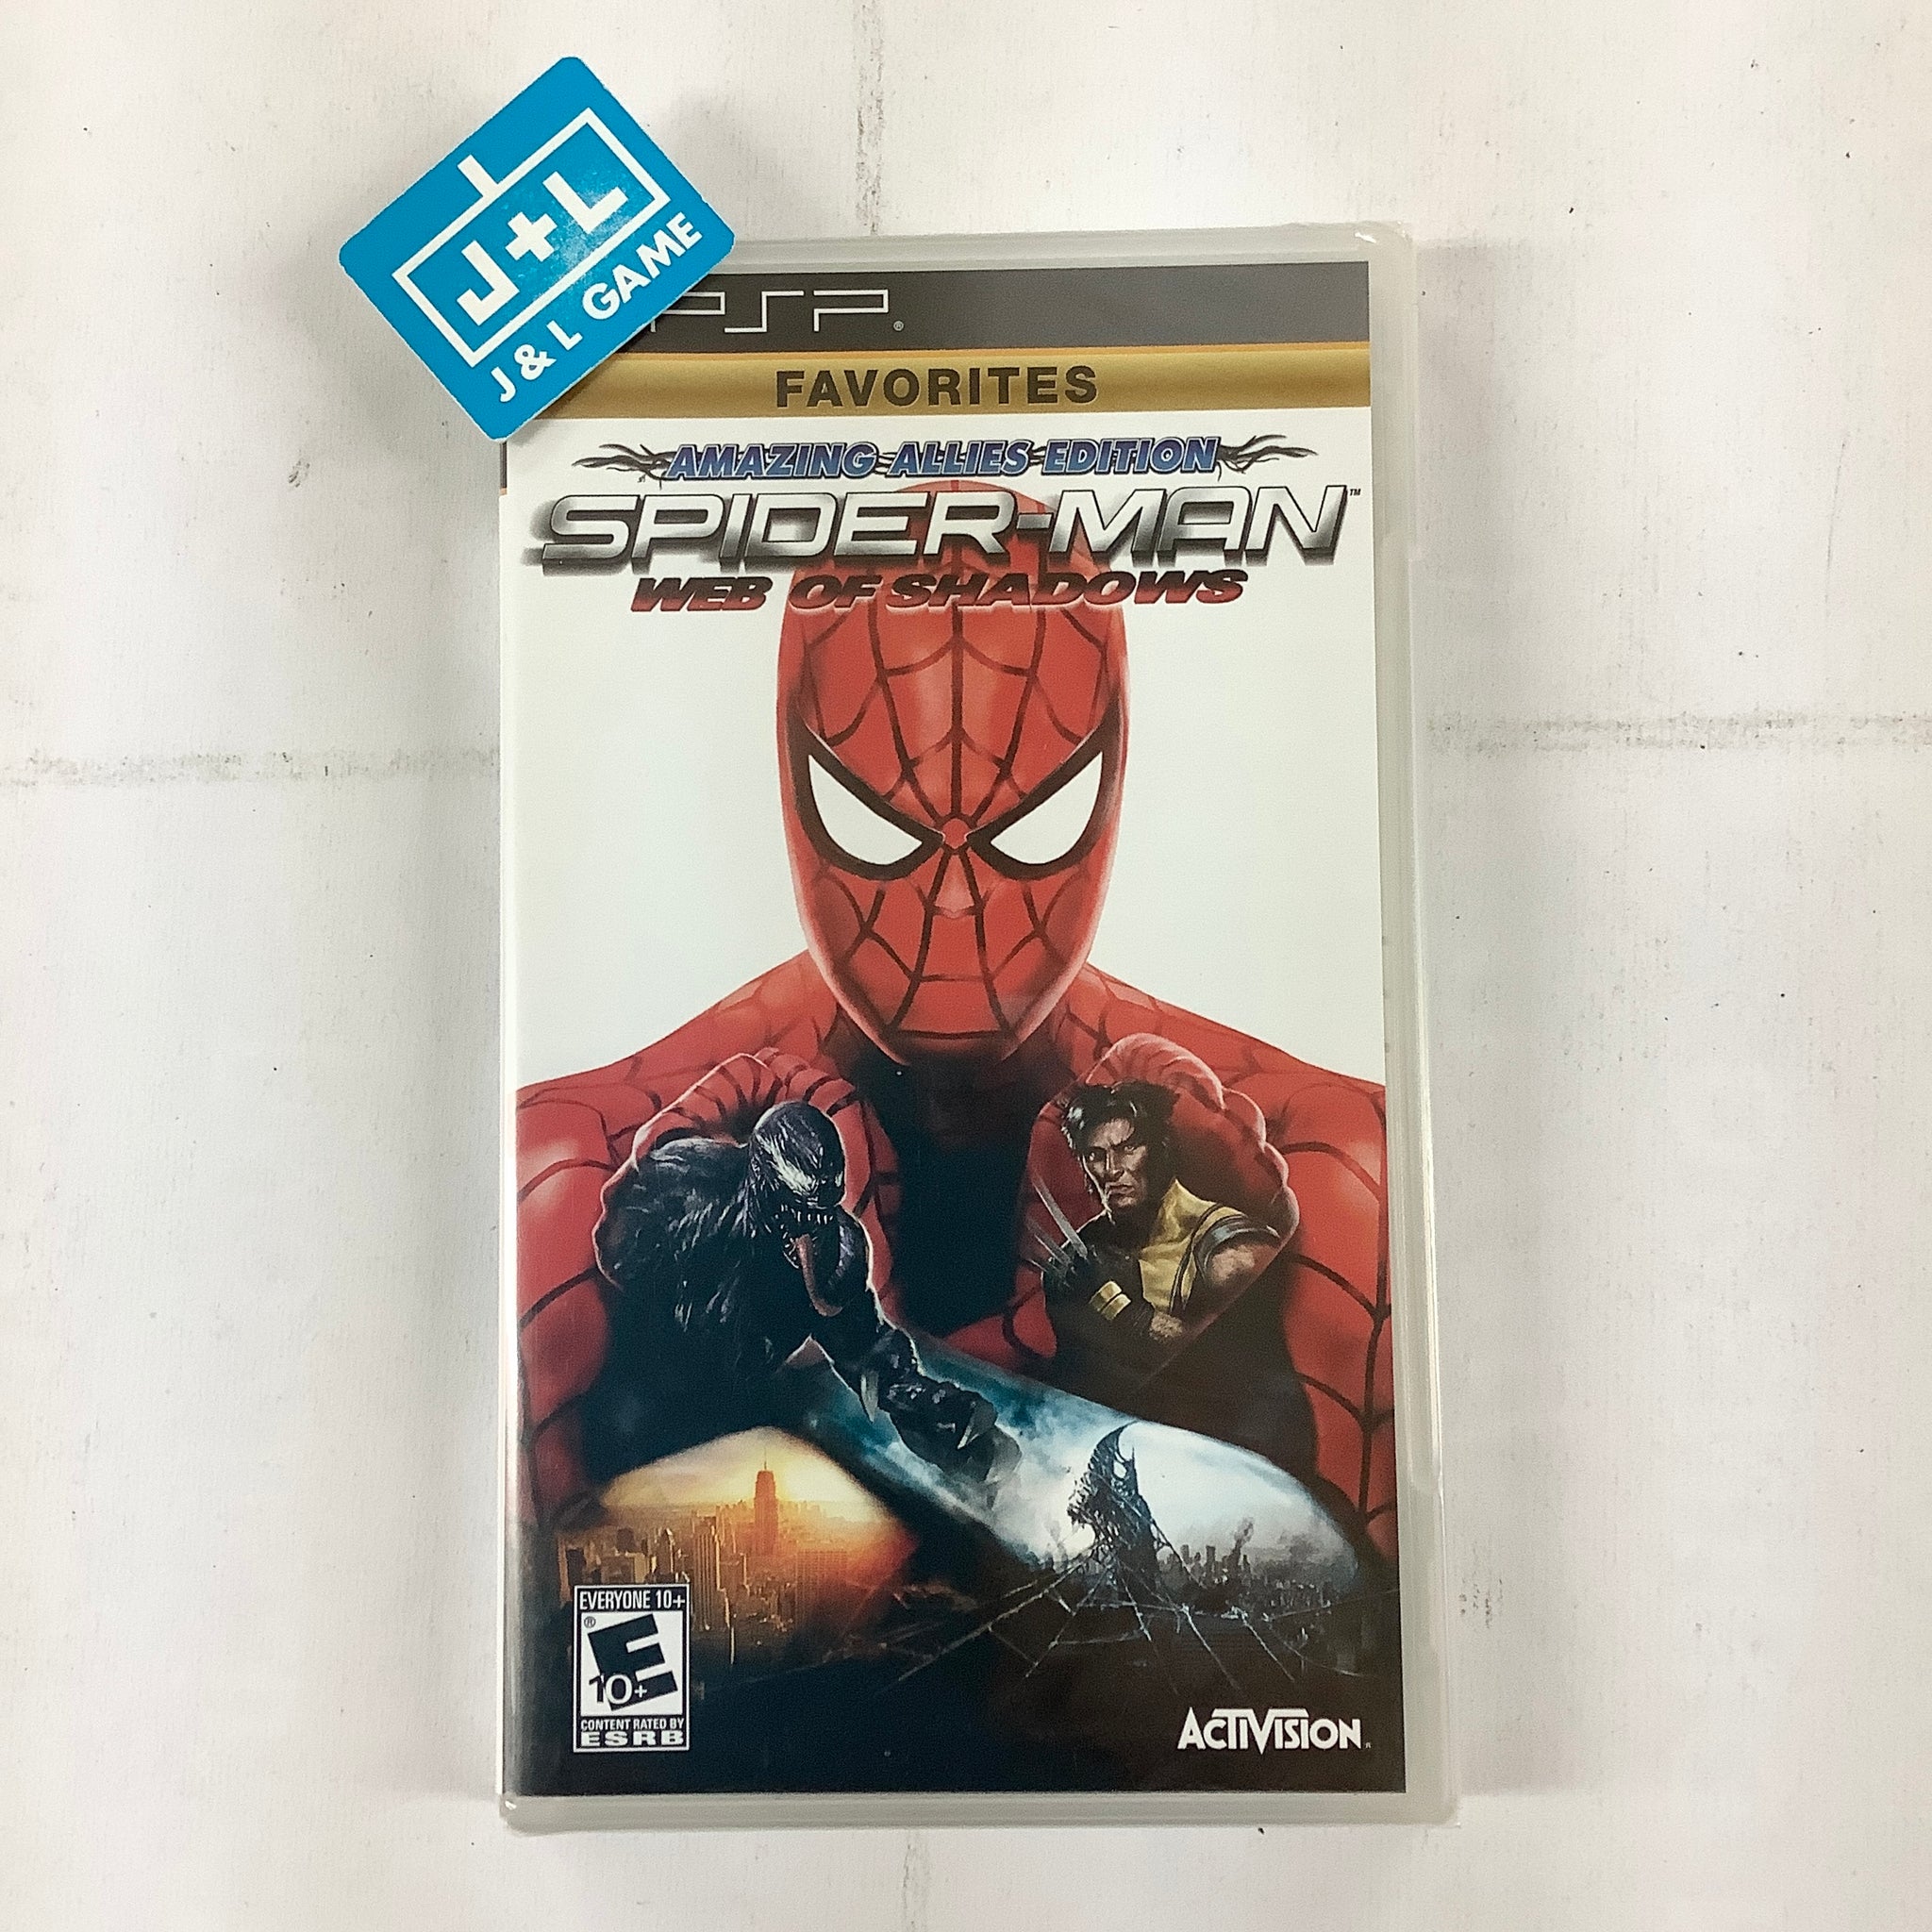 Spider-Man: Web of Shadows (Amazing Allies Edition) - SONY PSP